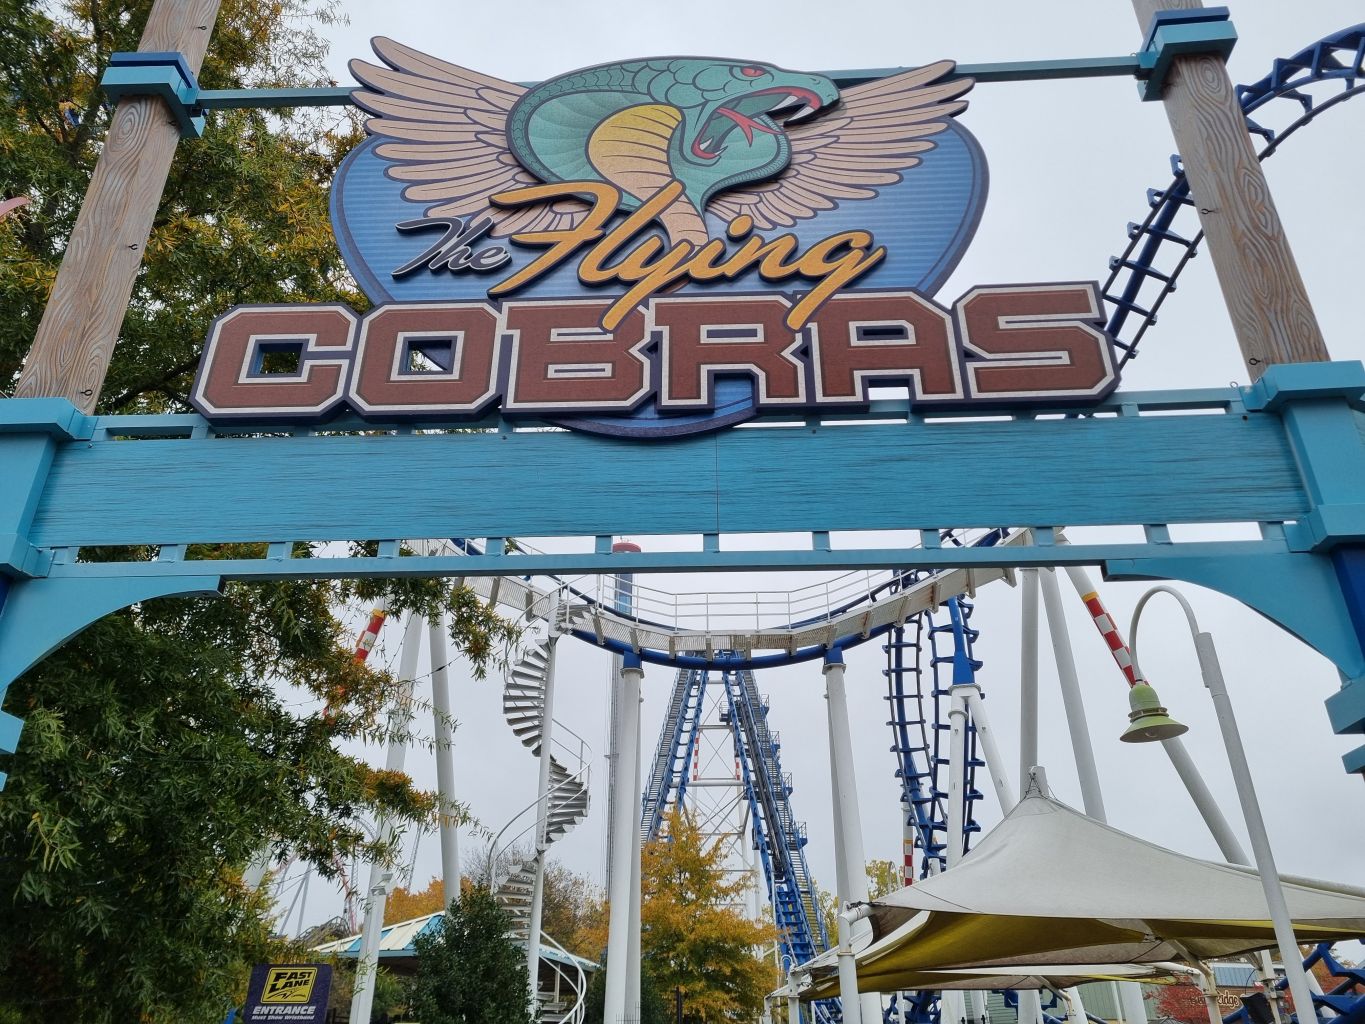 The Flying Cobras